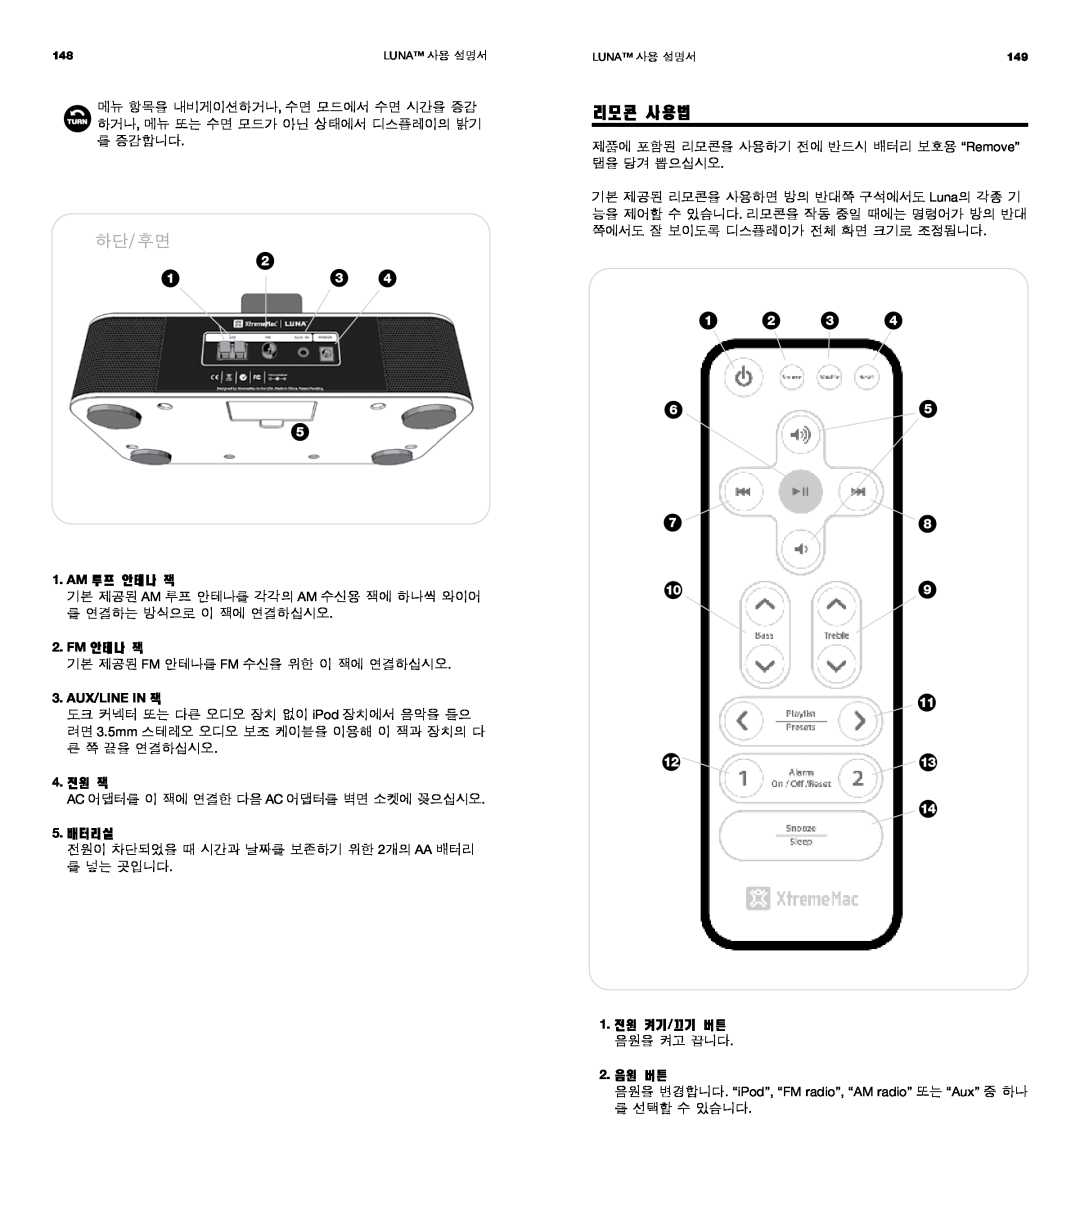 XtremeMac Room Audio System user manual 리모콘 사용법, 3.AUX/LINE IN 잭 